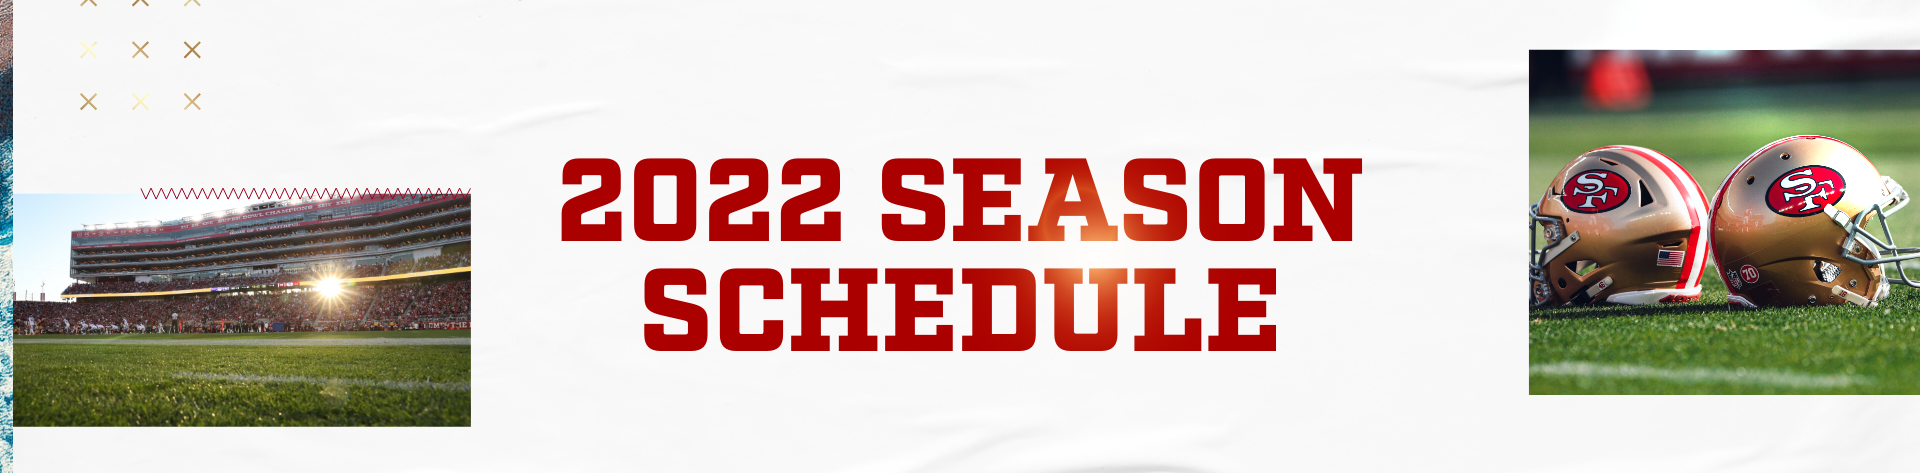 49ers Schedule | San Francisco 49ers 